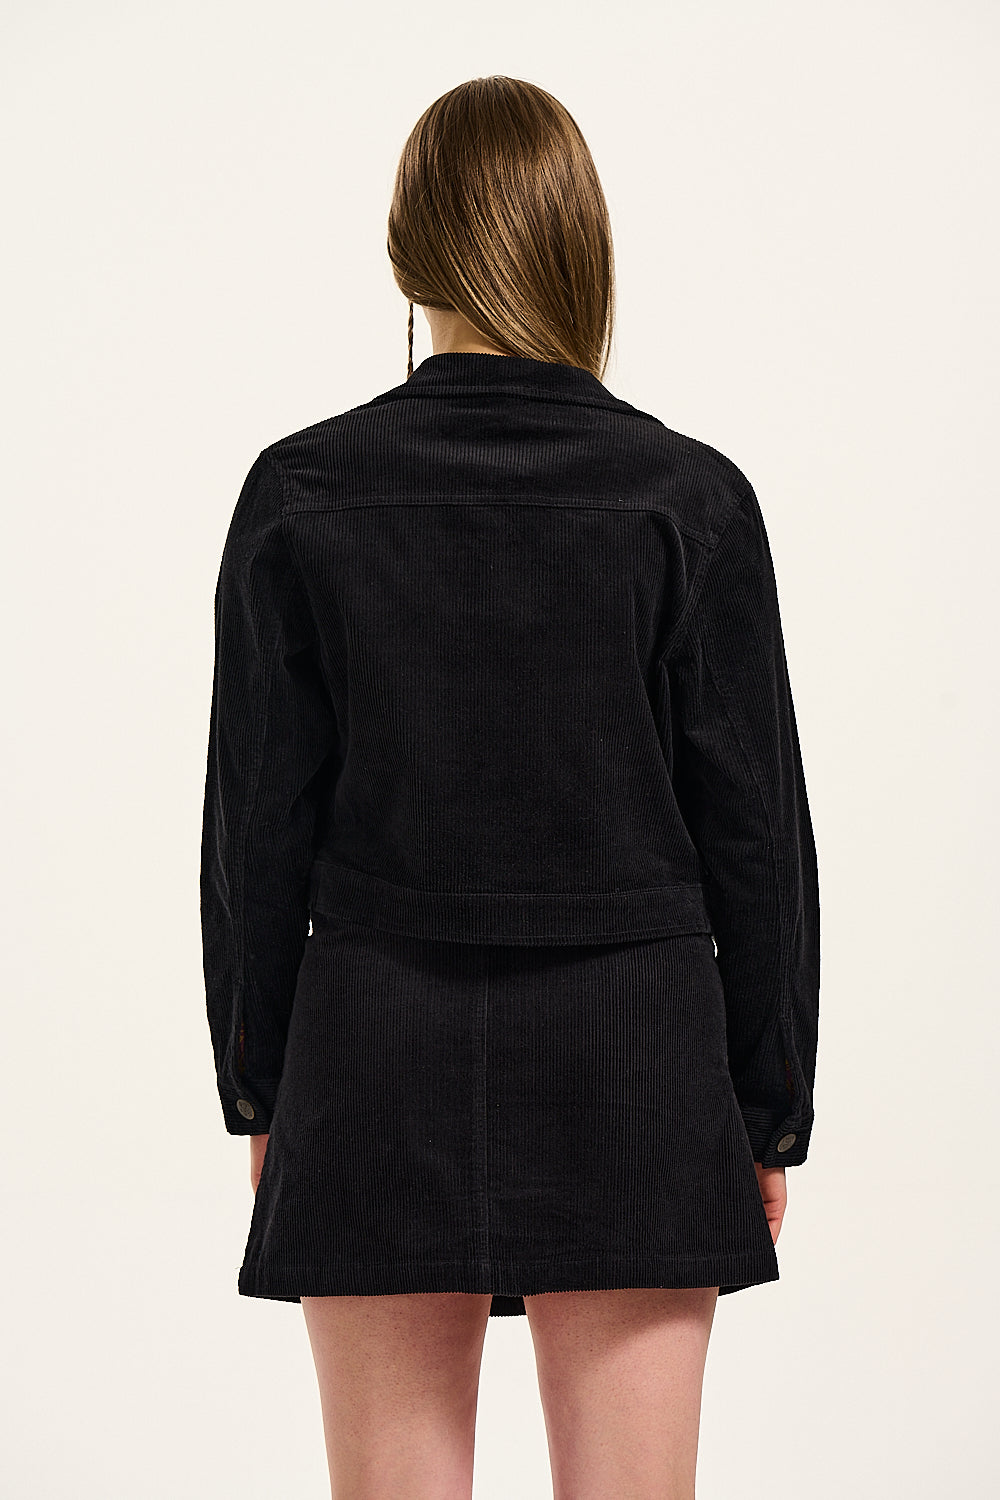 Roxy Cropped Jacket: ORGANIC CORDUROY - Black